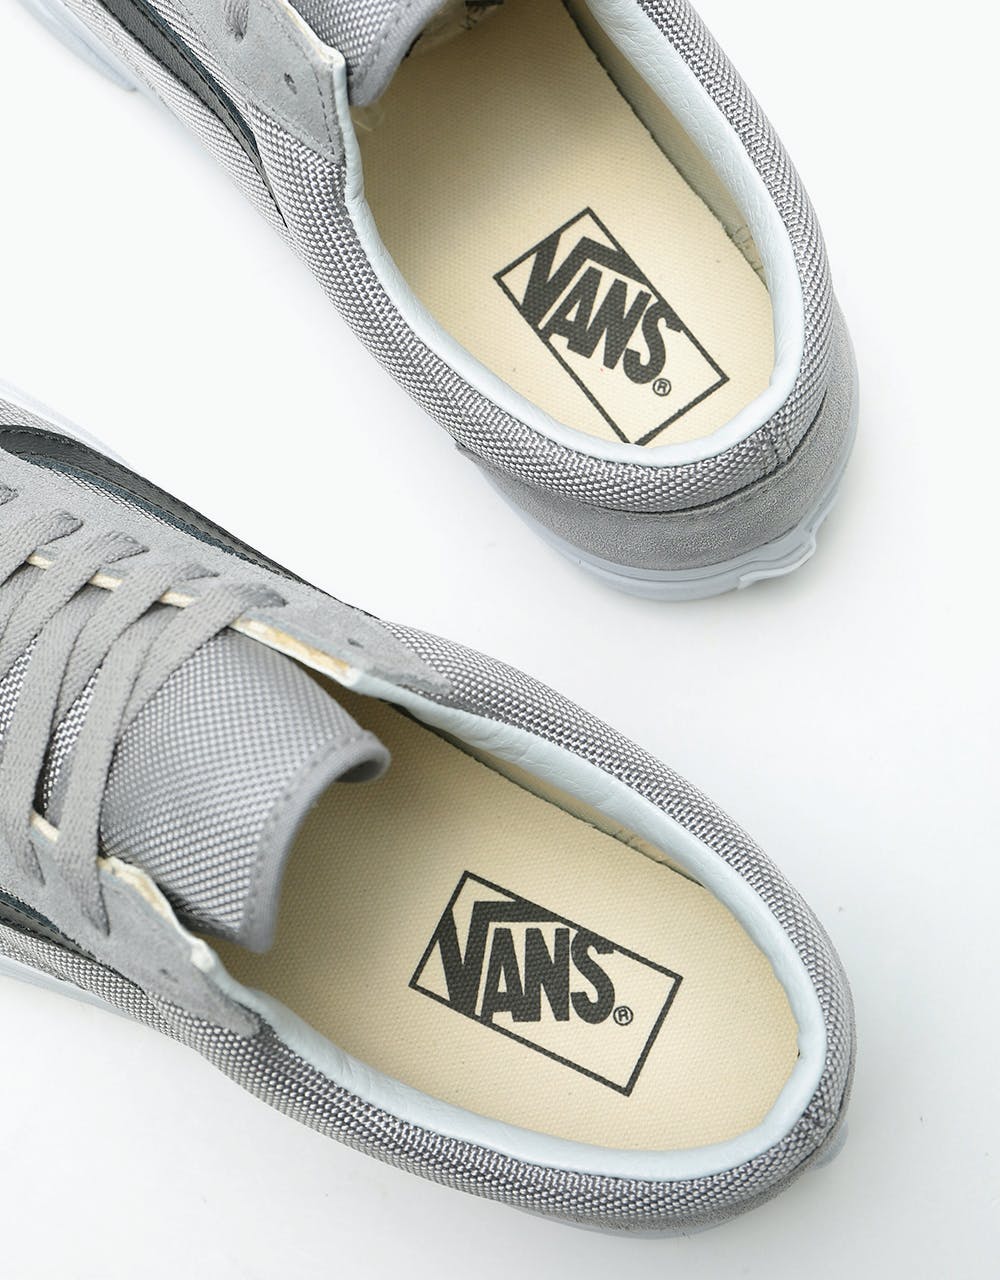 Vans Style 36 Skate Shoes - (Ballistic) Alloy/Black/True White